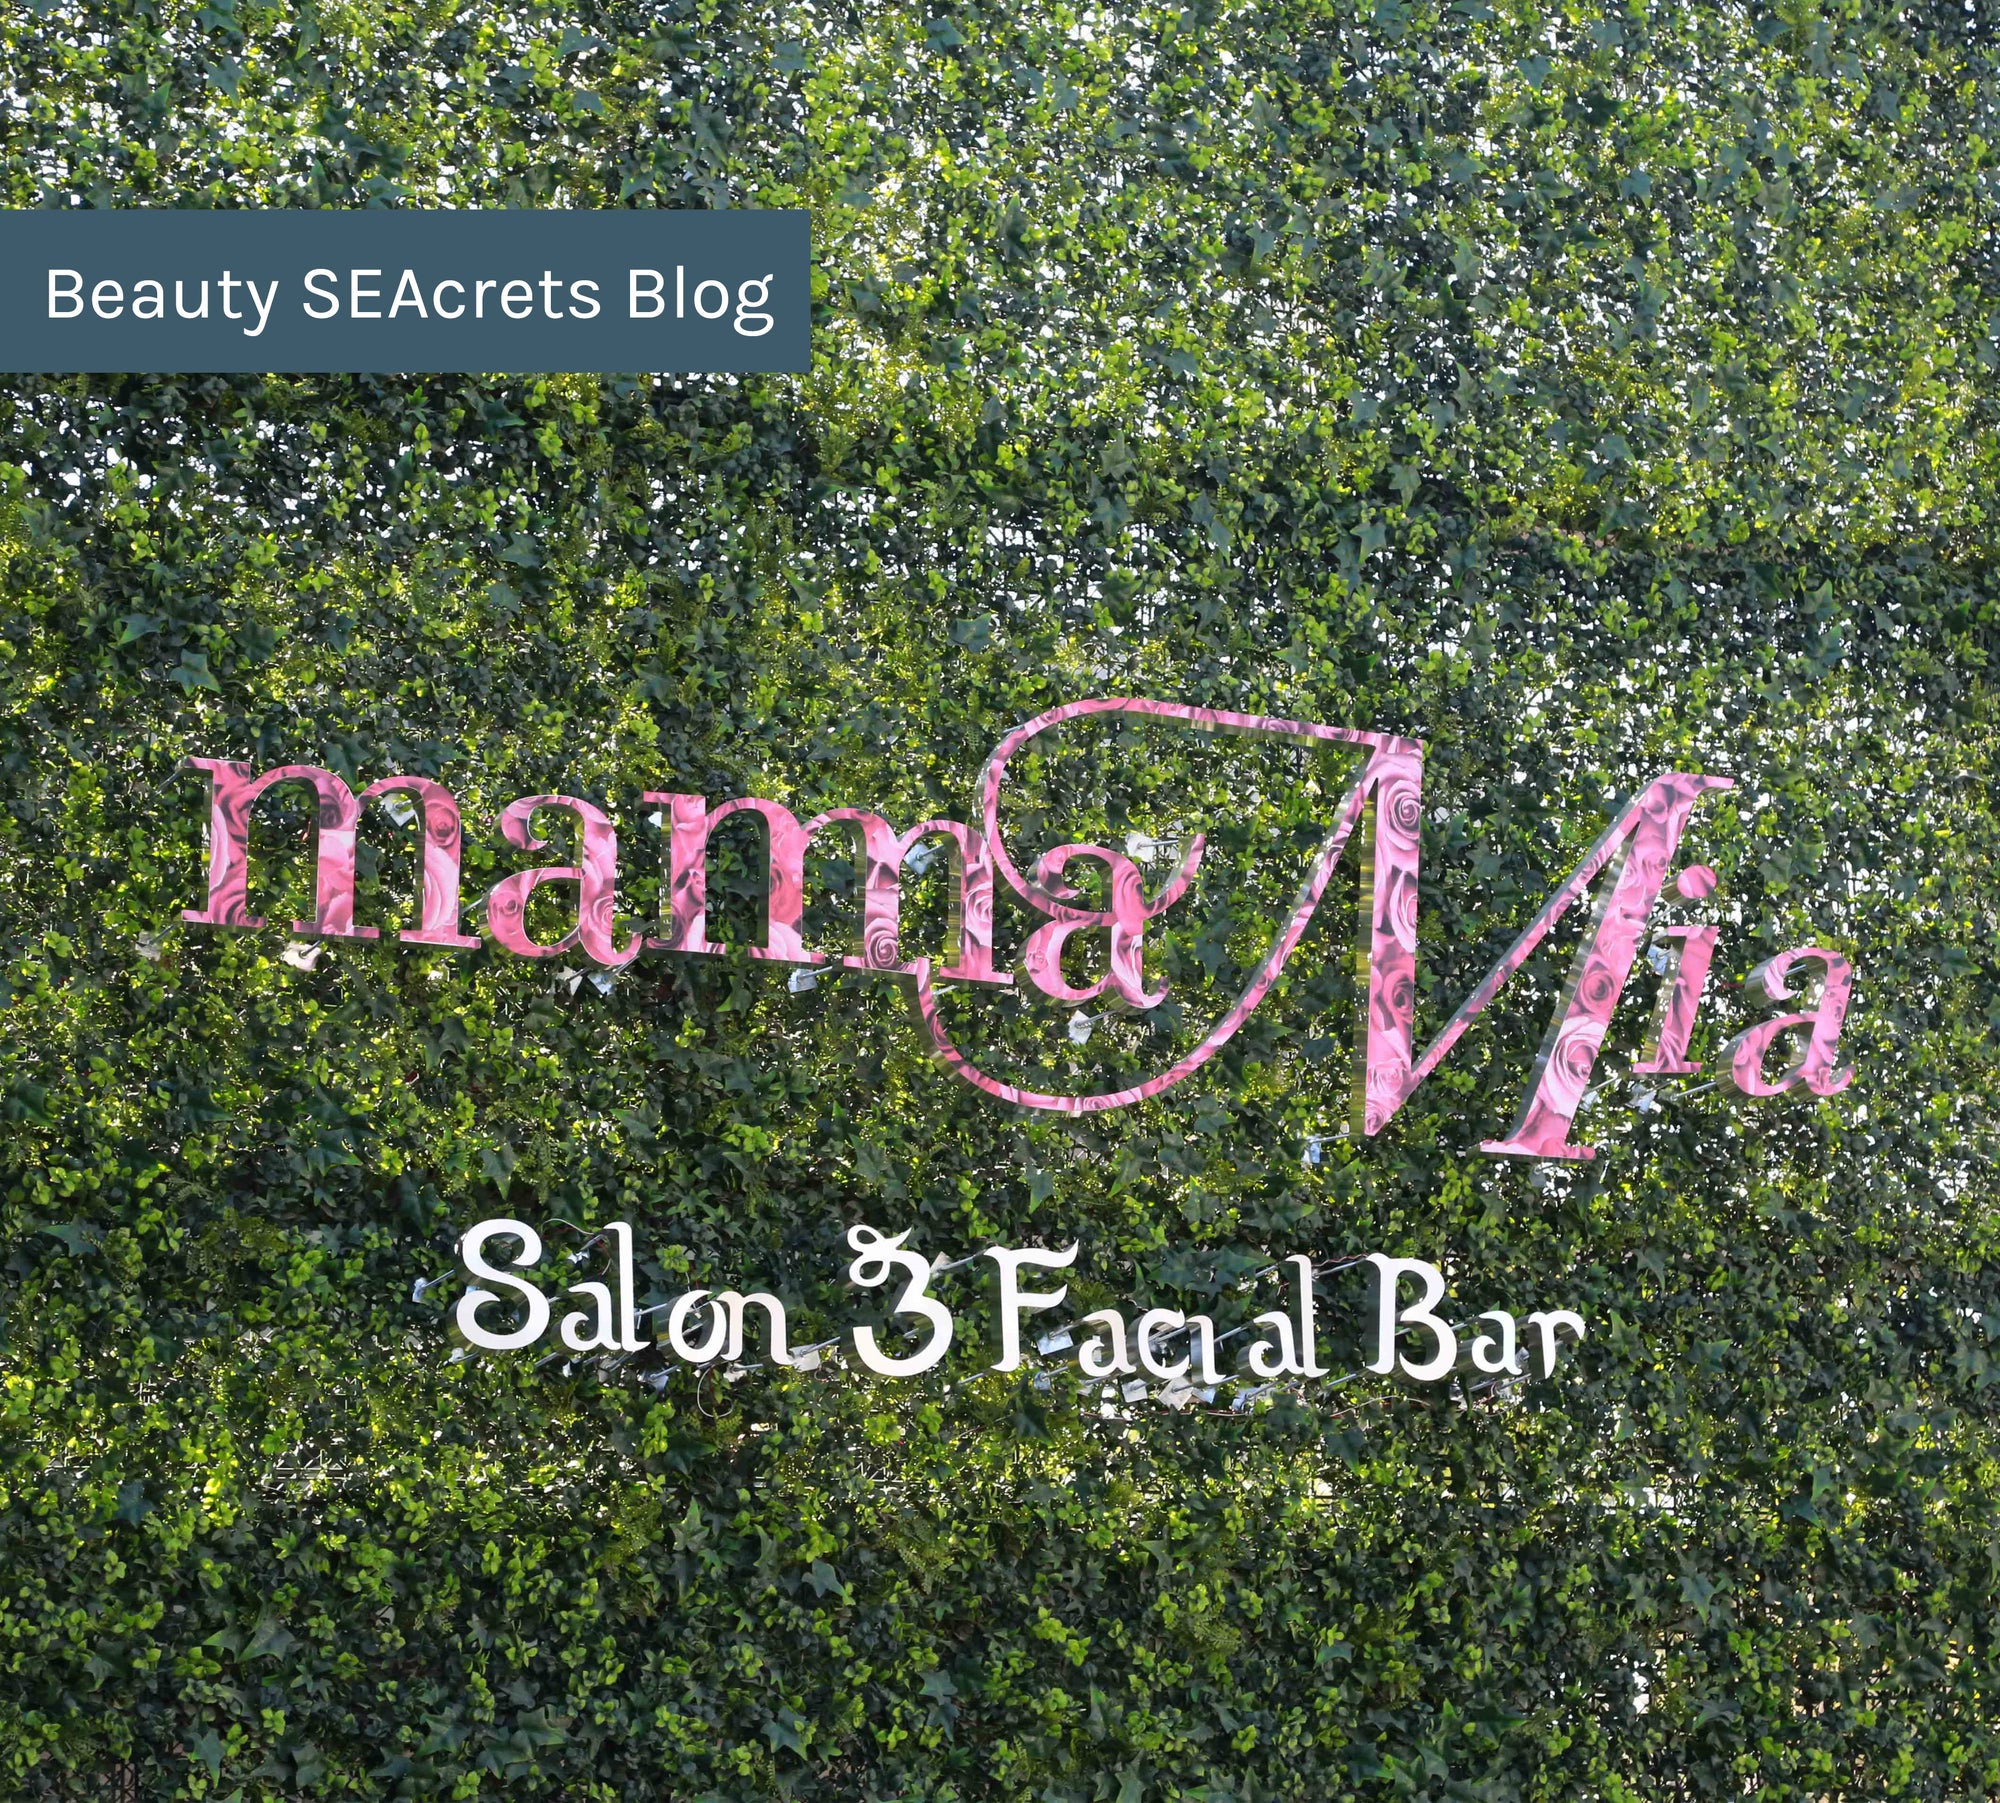 Spas around the Globe | Mother’s Day Spa Inspiration: Mamma Mia Salon & Facial Bar